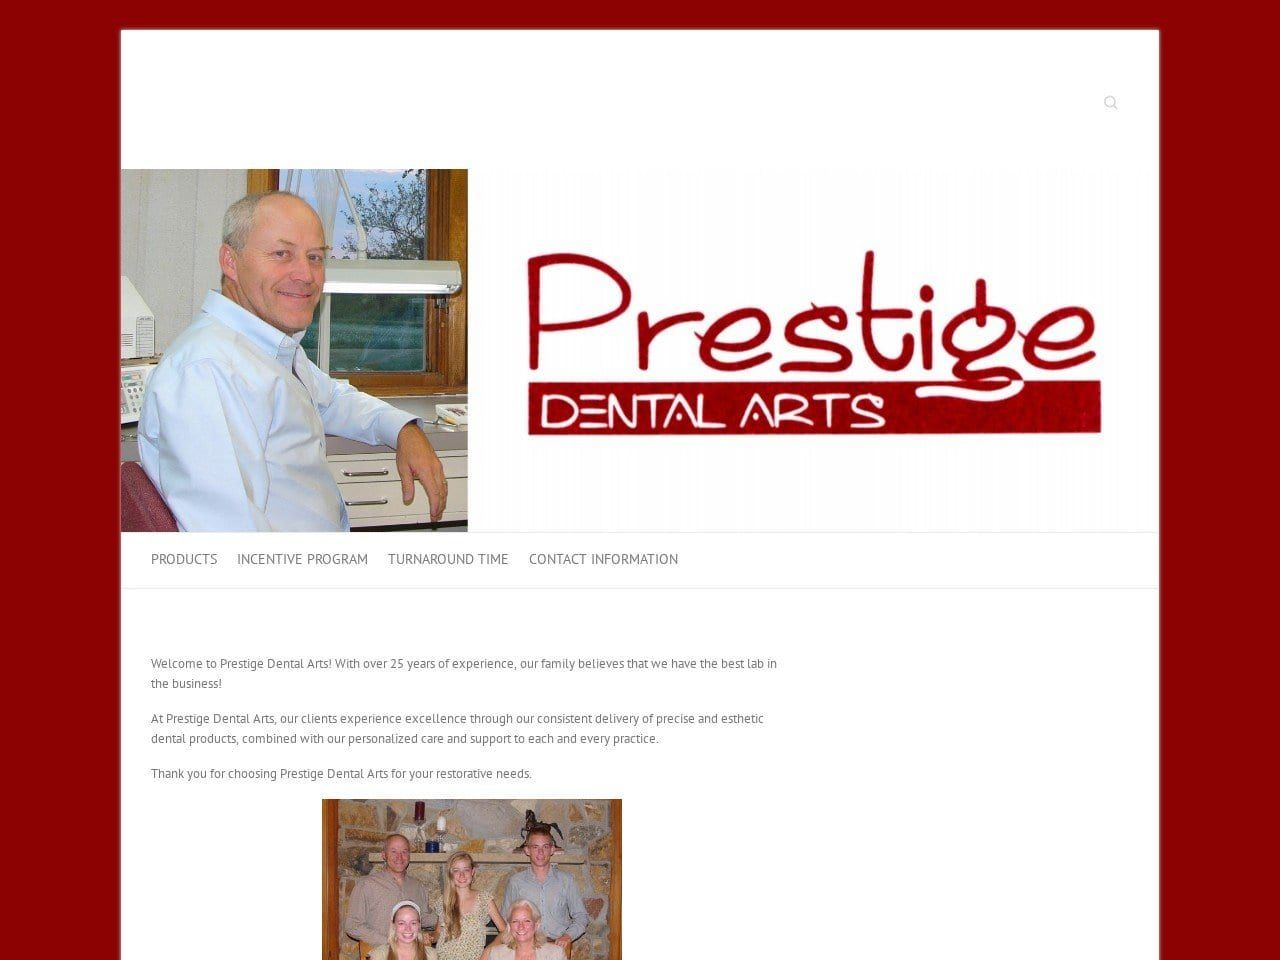 Prestige Dental Arts Website Screenshot from prestigedentarts.com